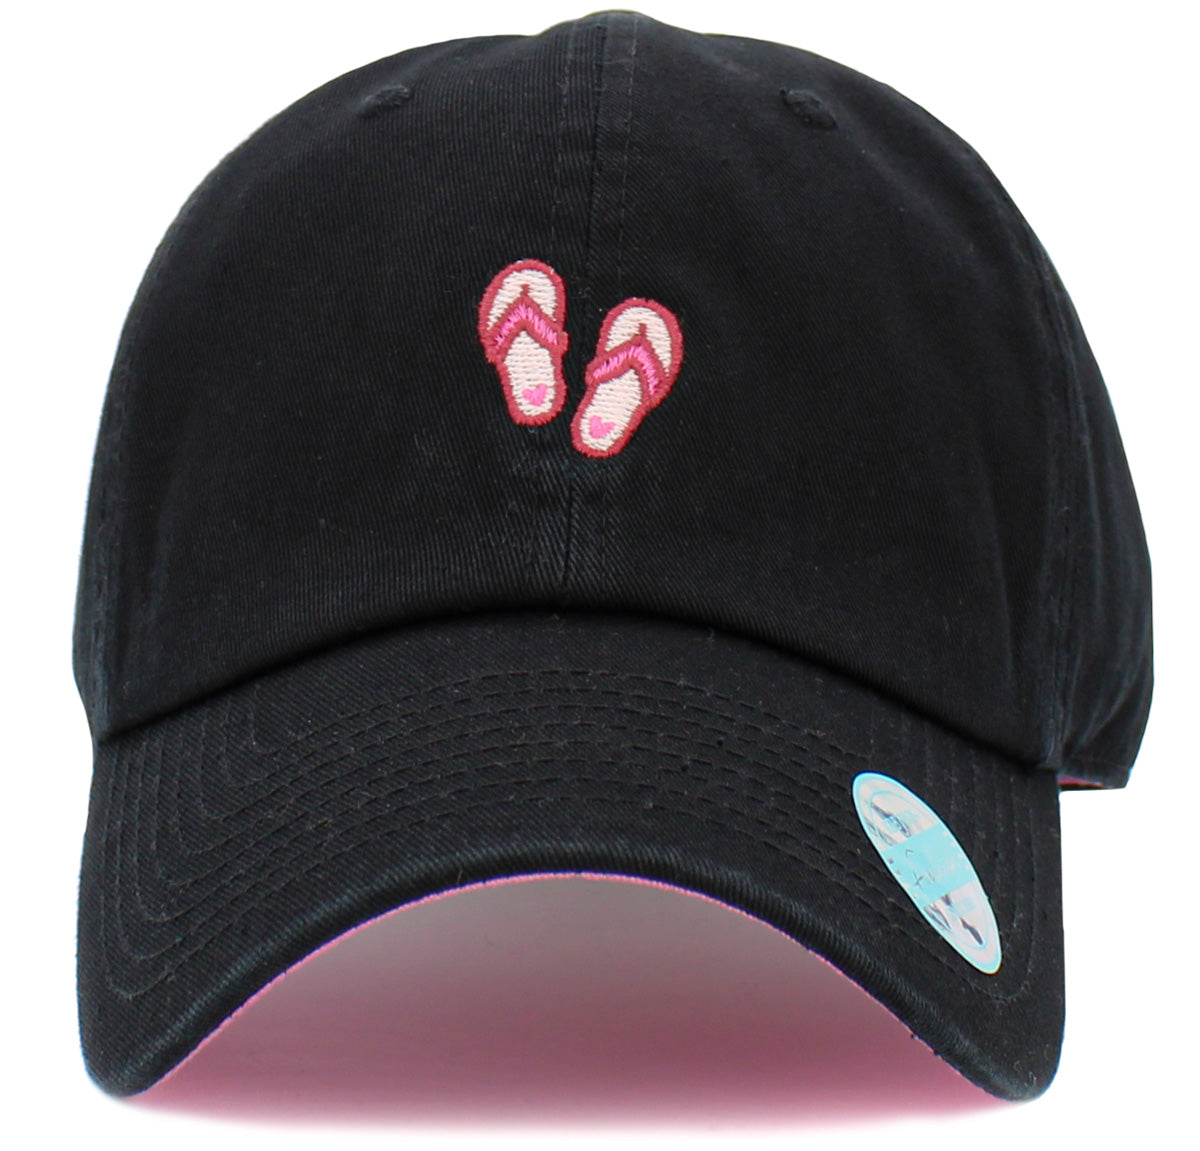 WKB005 Flip Flops Print Embroidery Hat Baseball Cap